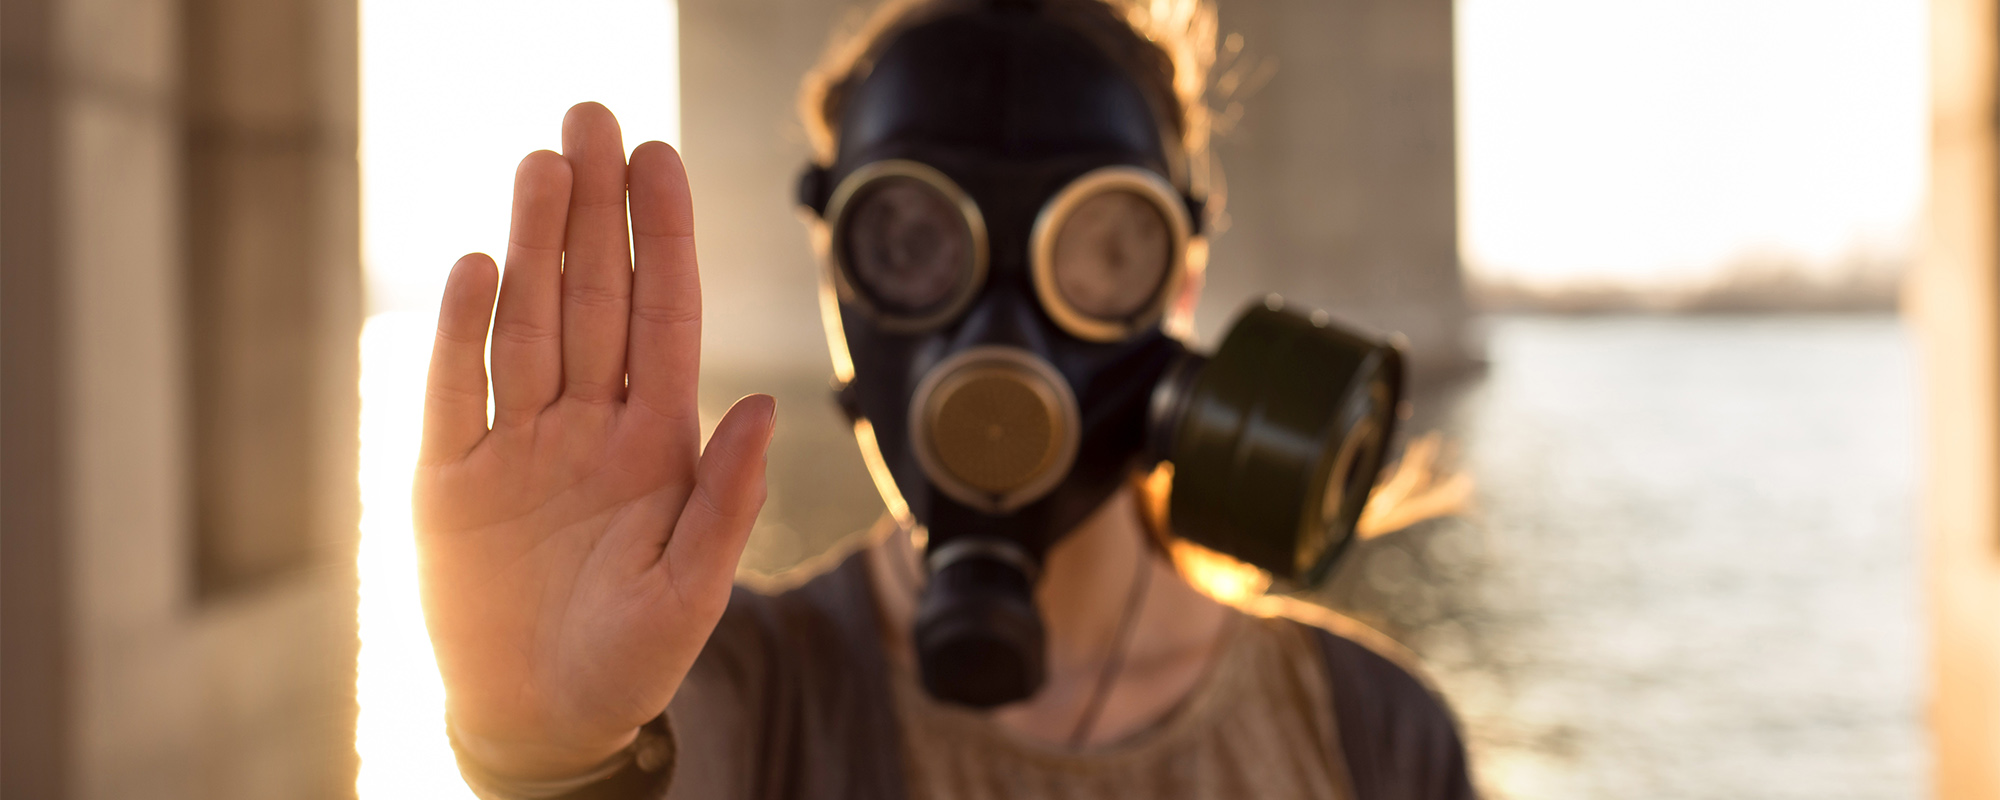 man wearing gas mask hand up